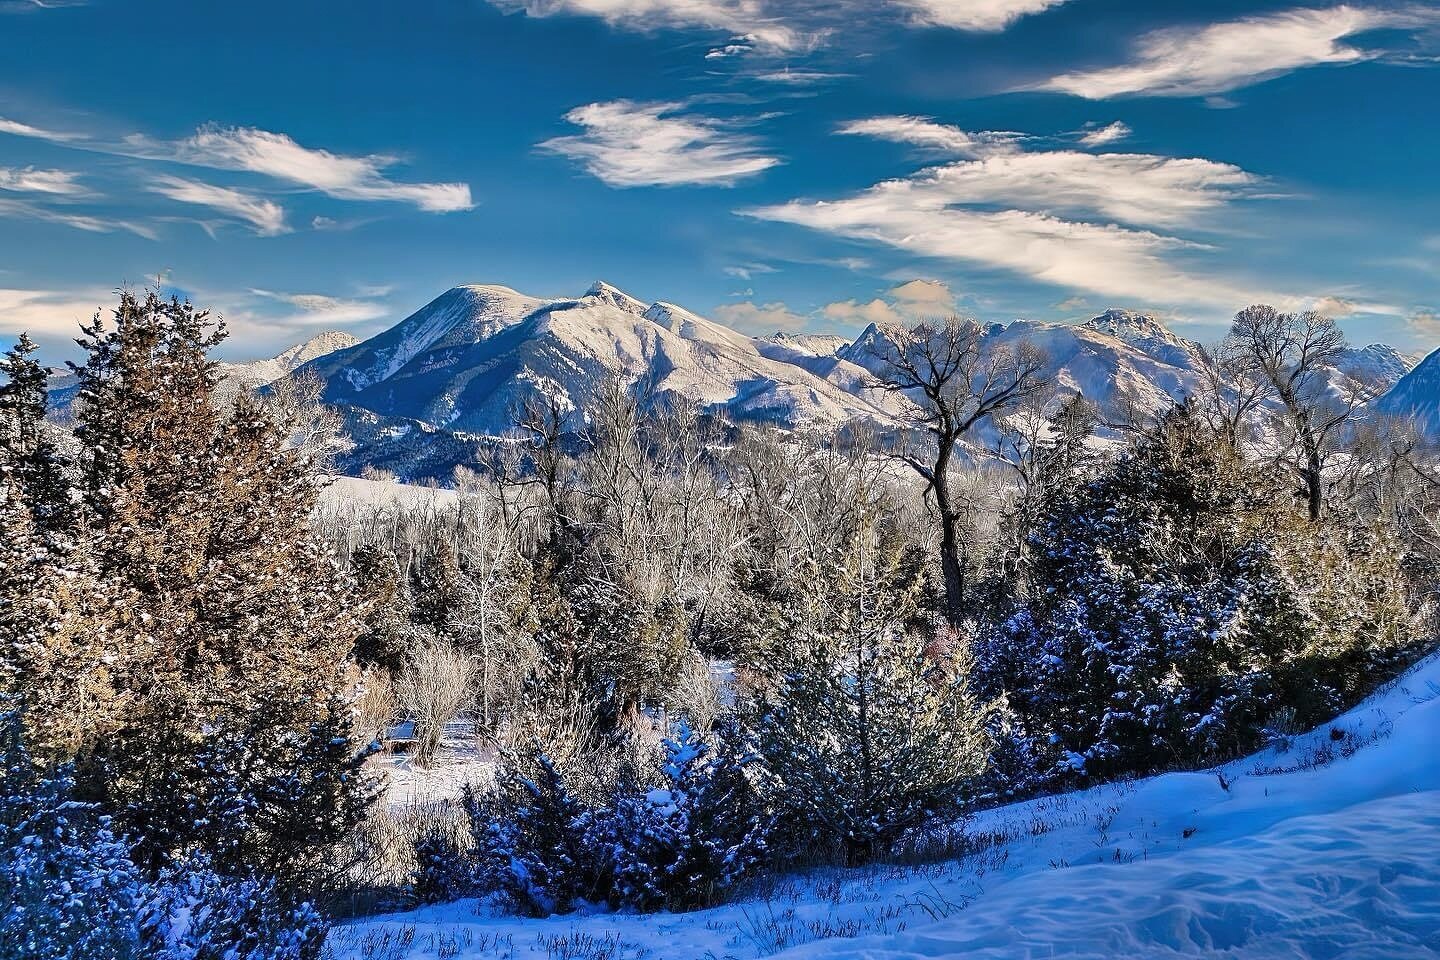 Blue Skies &amp; White Snow
.
#paradisevalley #explorelivingstonmt #blueskys #whitesnow #fluffysnow #bluebirdday #montanamoment #yellowstone #yellowstonecountry #snowcovered